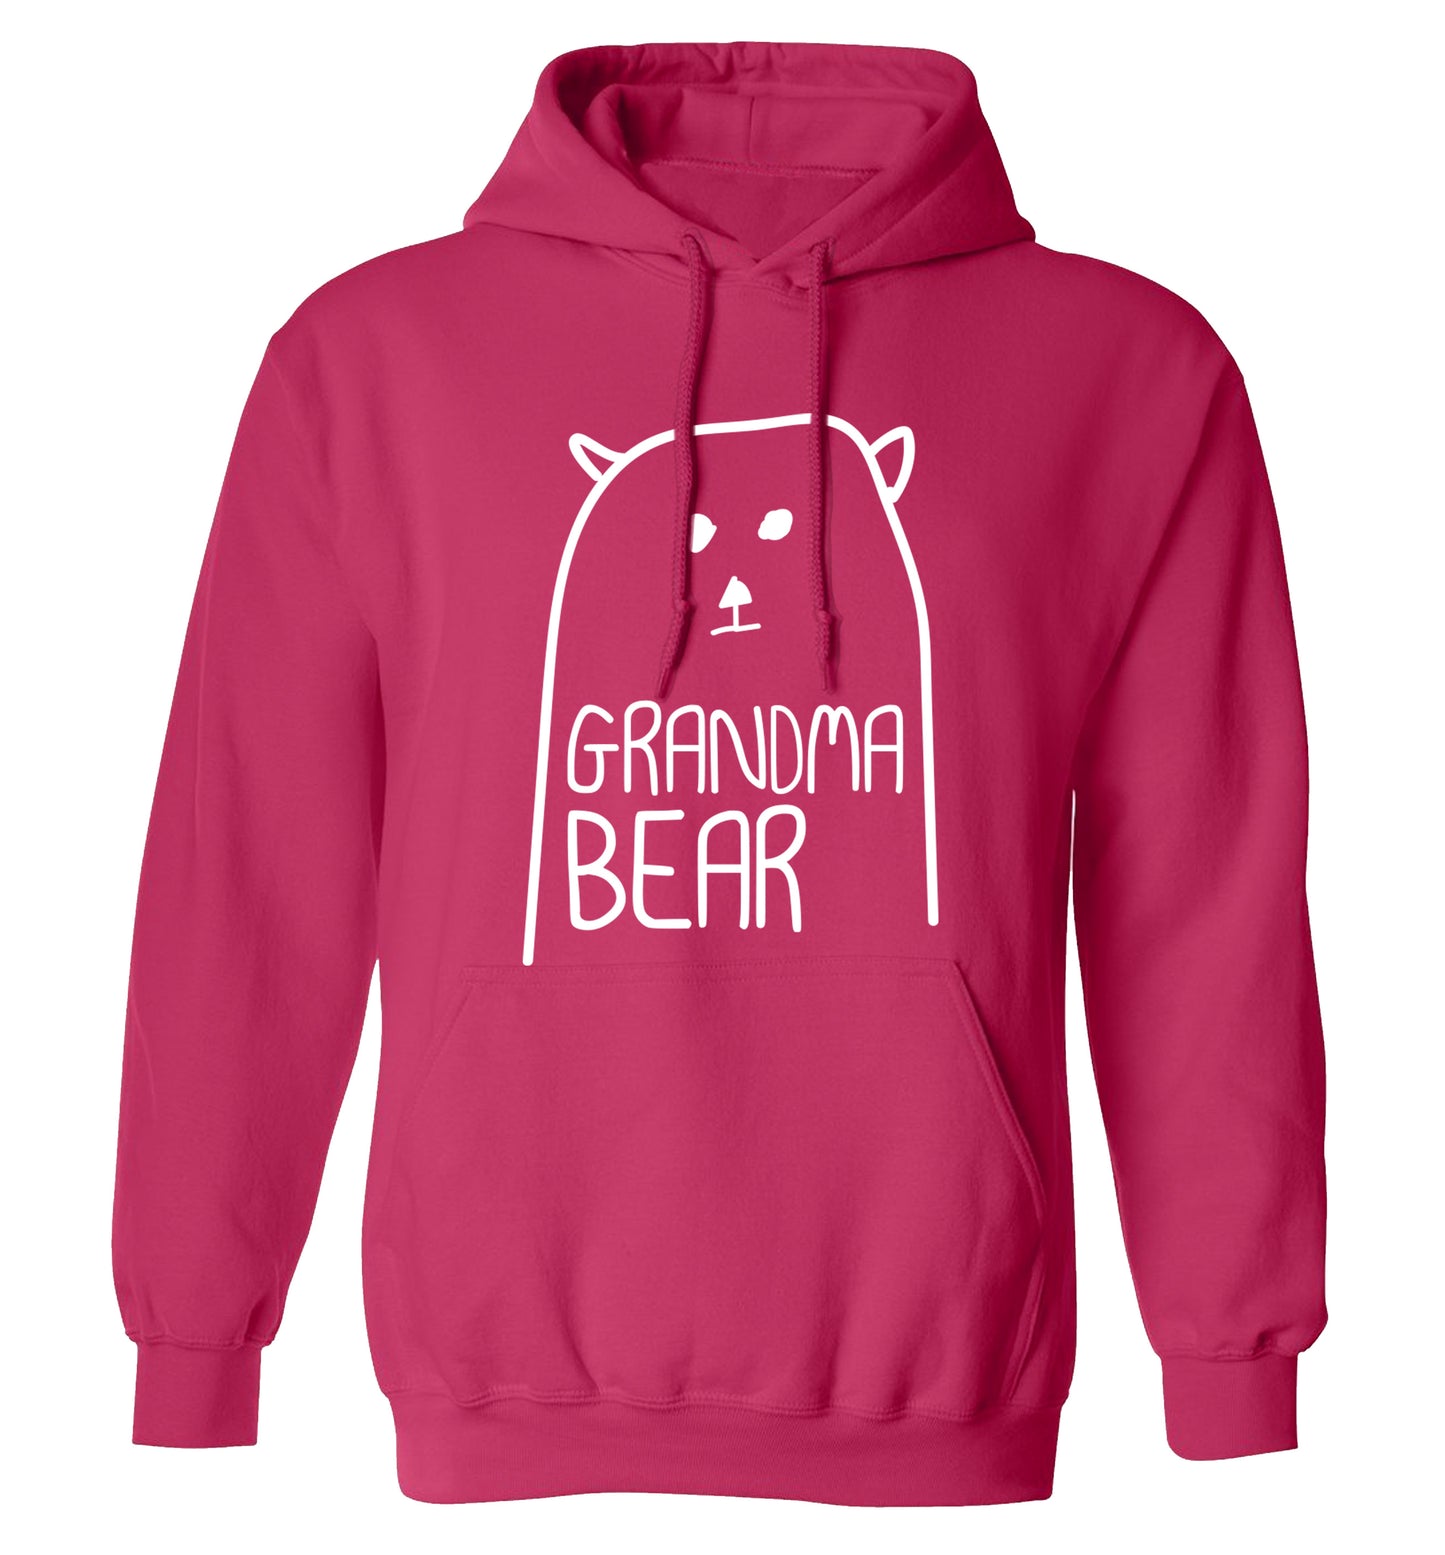 Grandma bear adults unisex pink hoodie 2XL